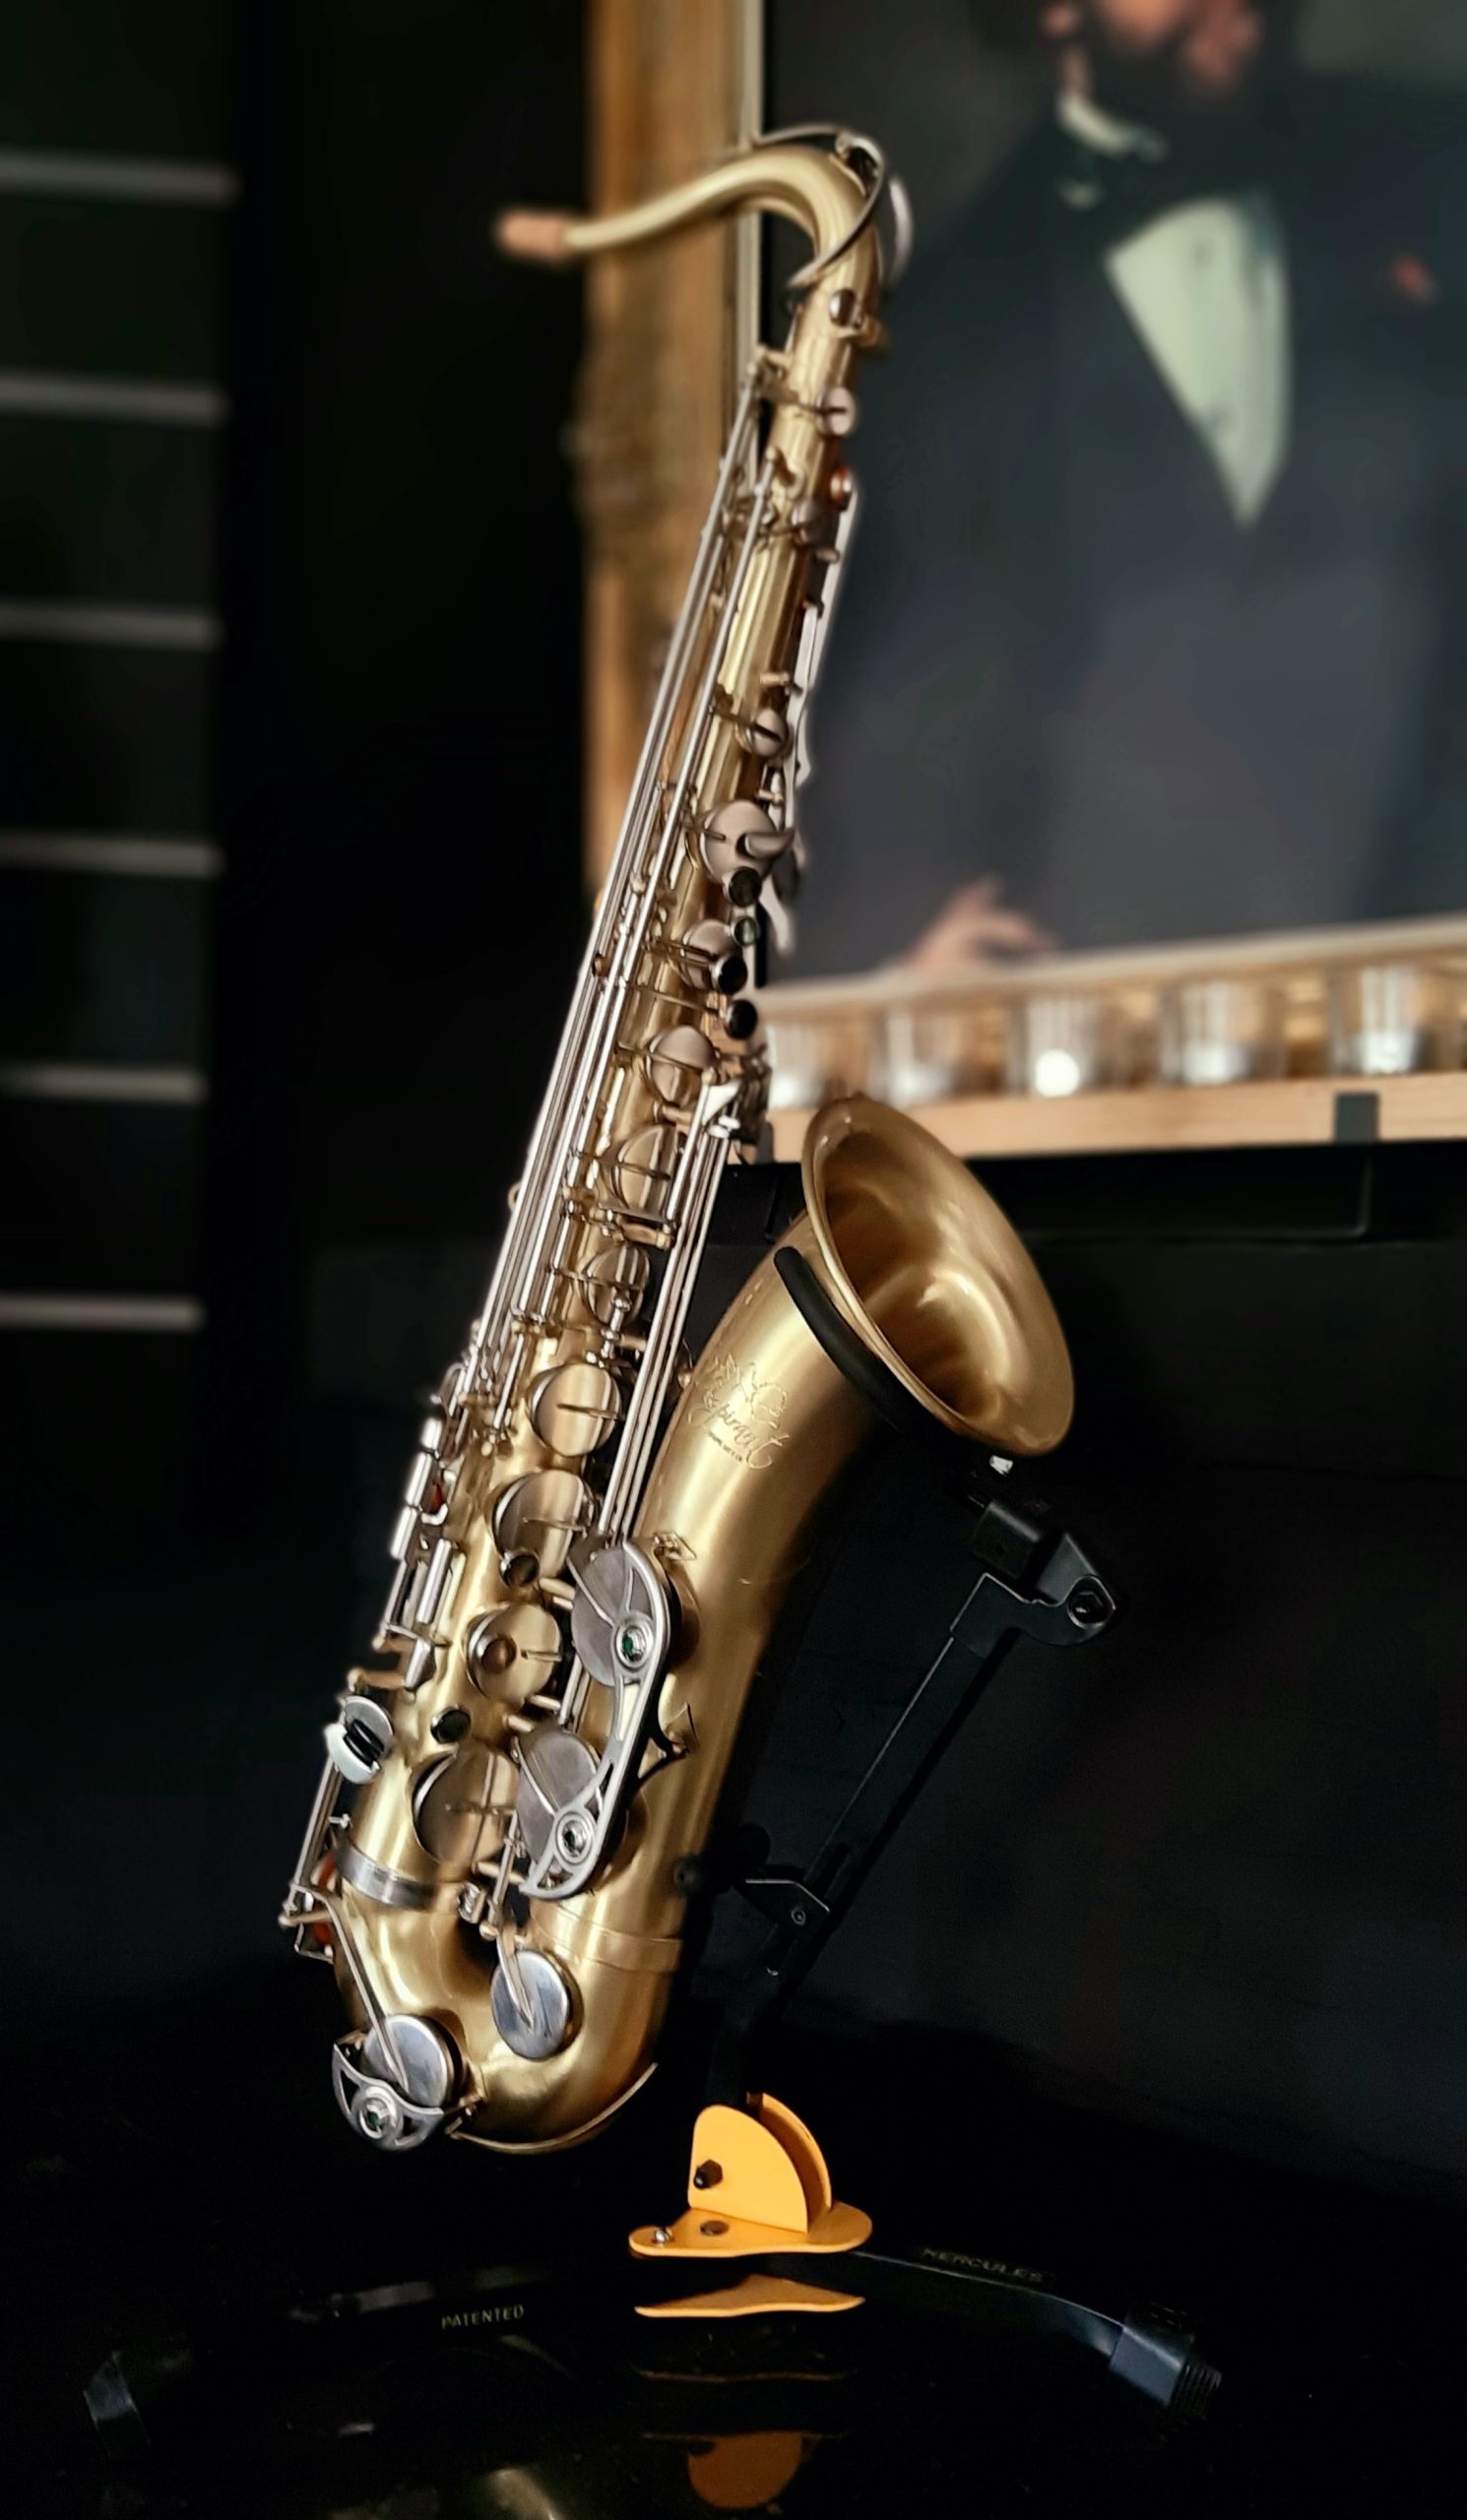 Aspirant II tenor sax